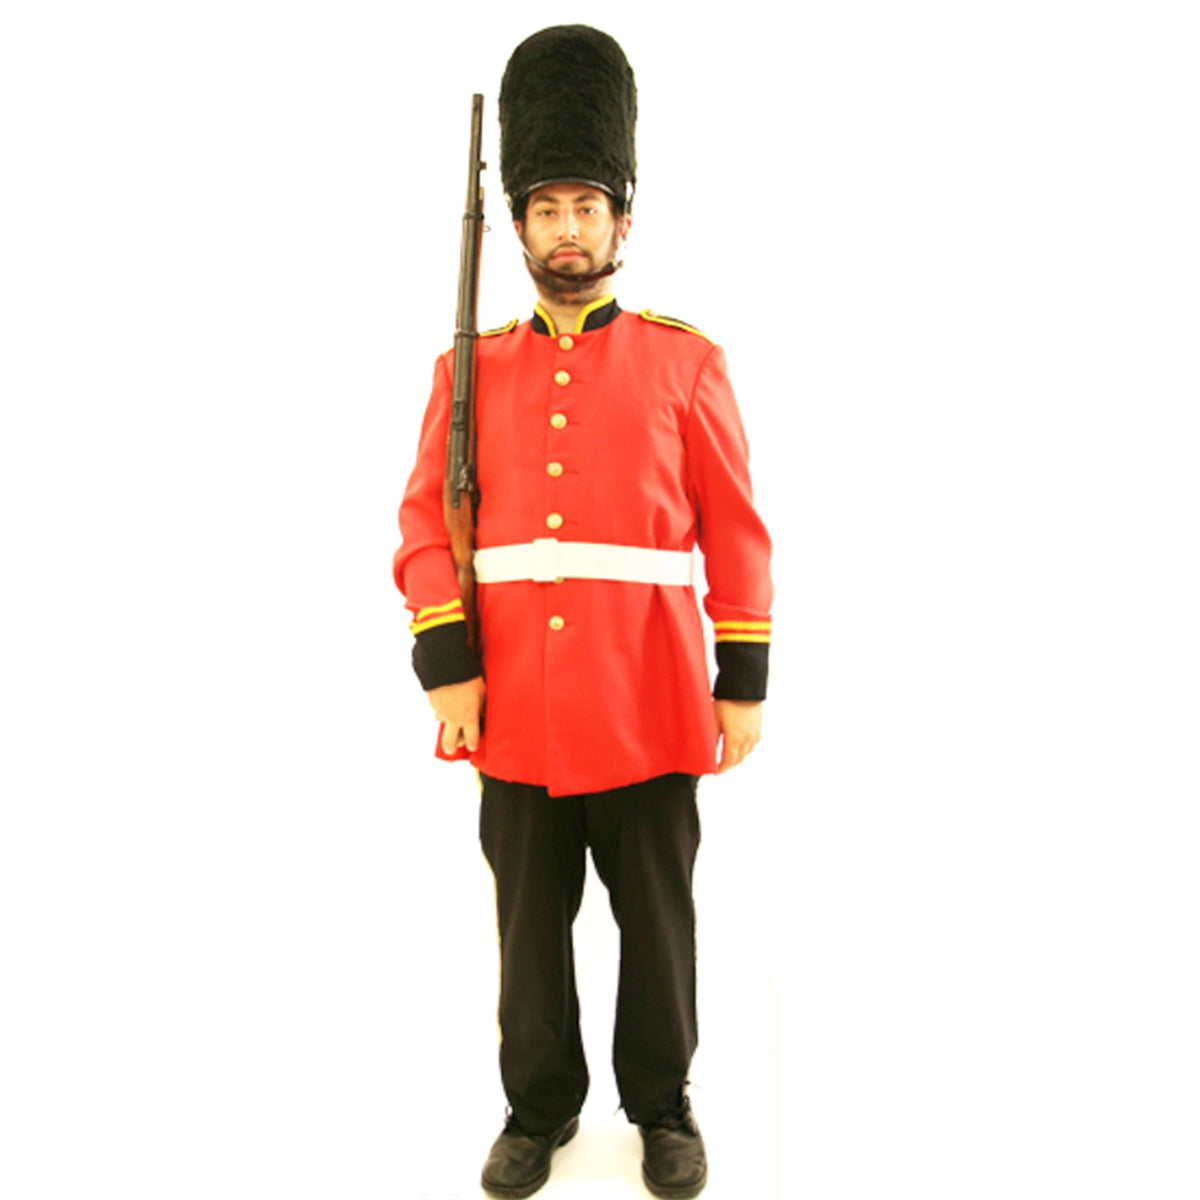 British London Palace Royal Foot Guard Uniform Adult Costume